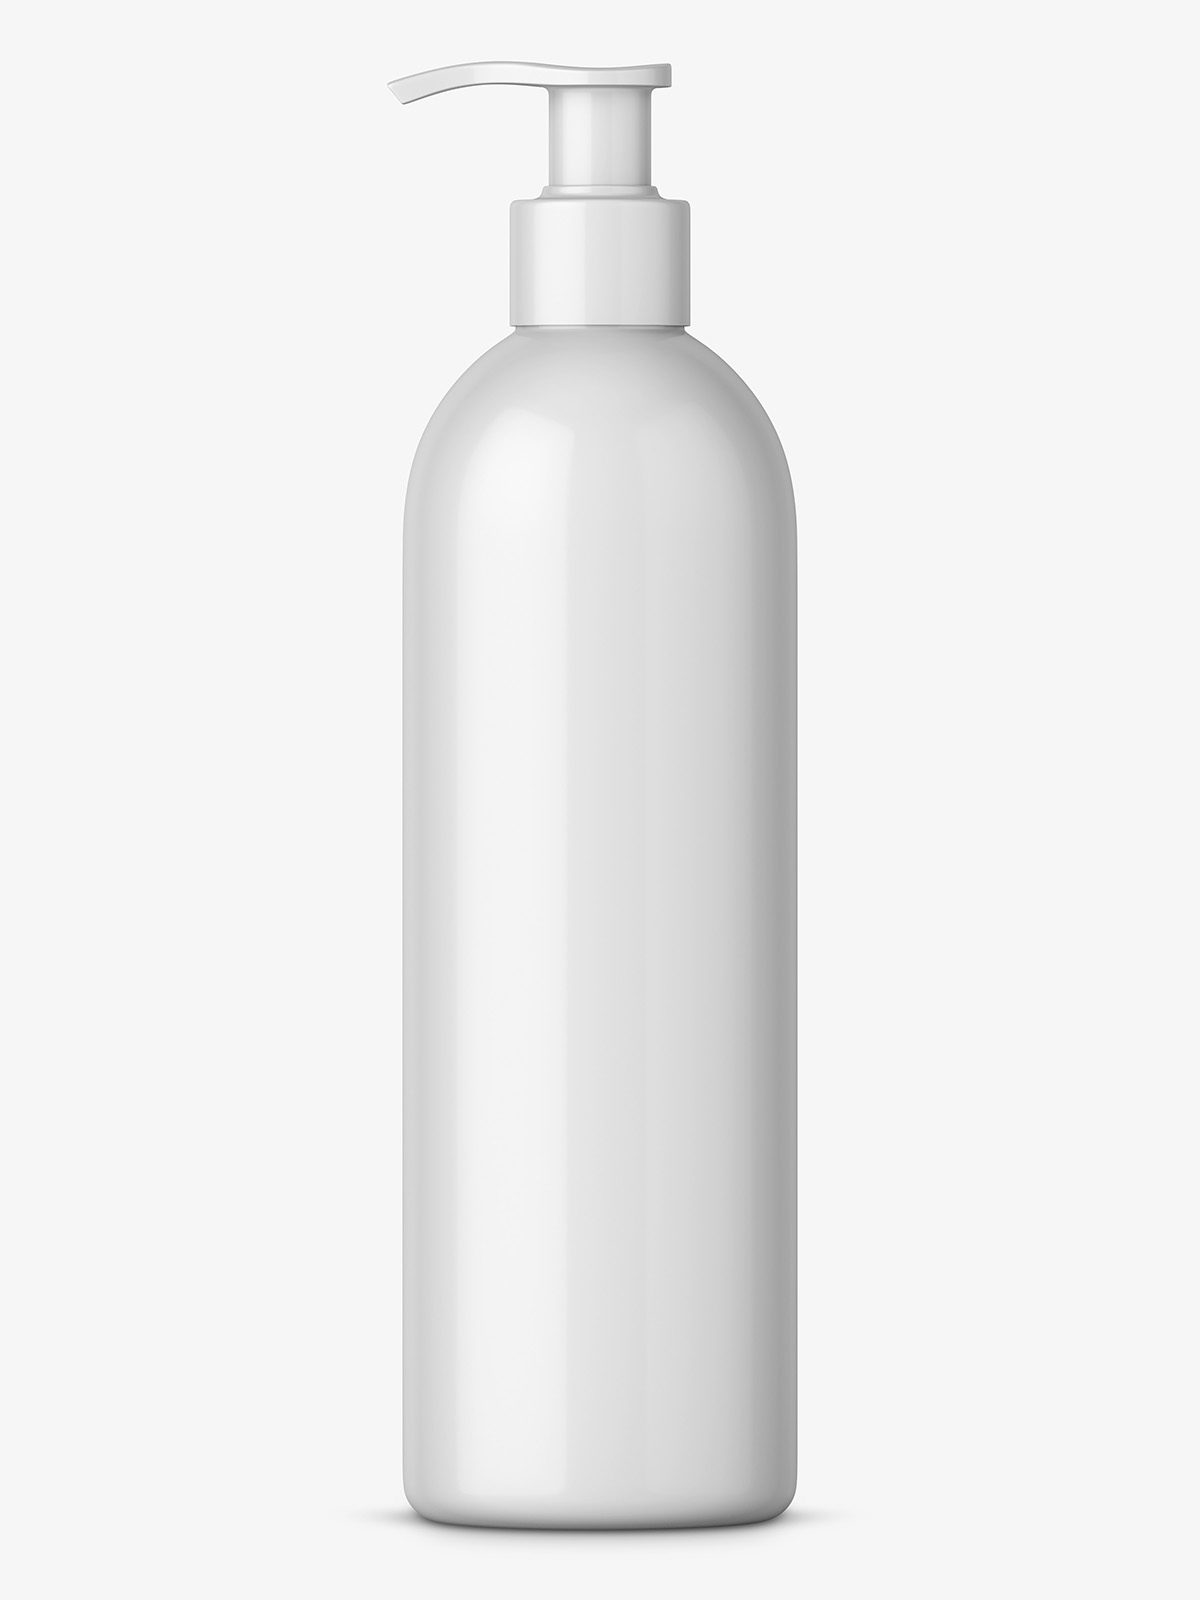 Download 14+ White Bottle Mockup Potoshop - These mock-up templates ...